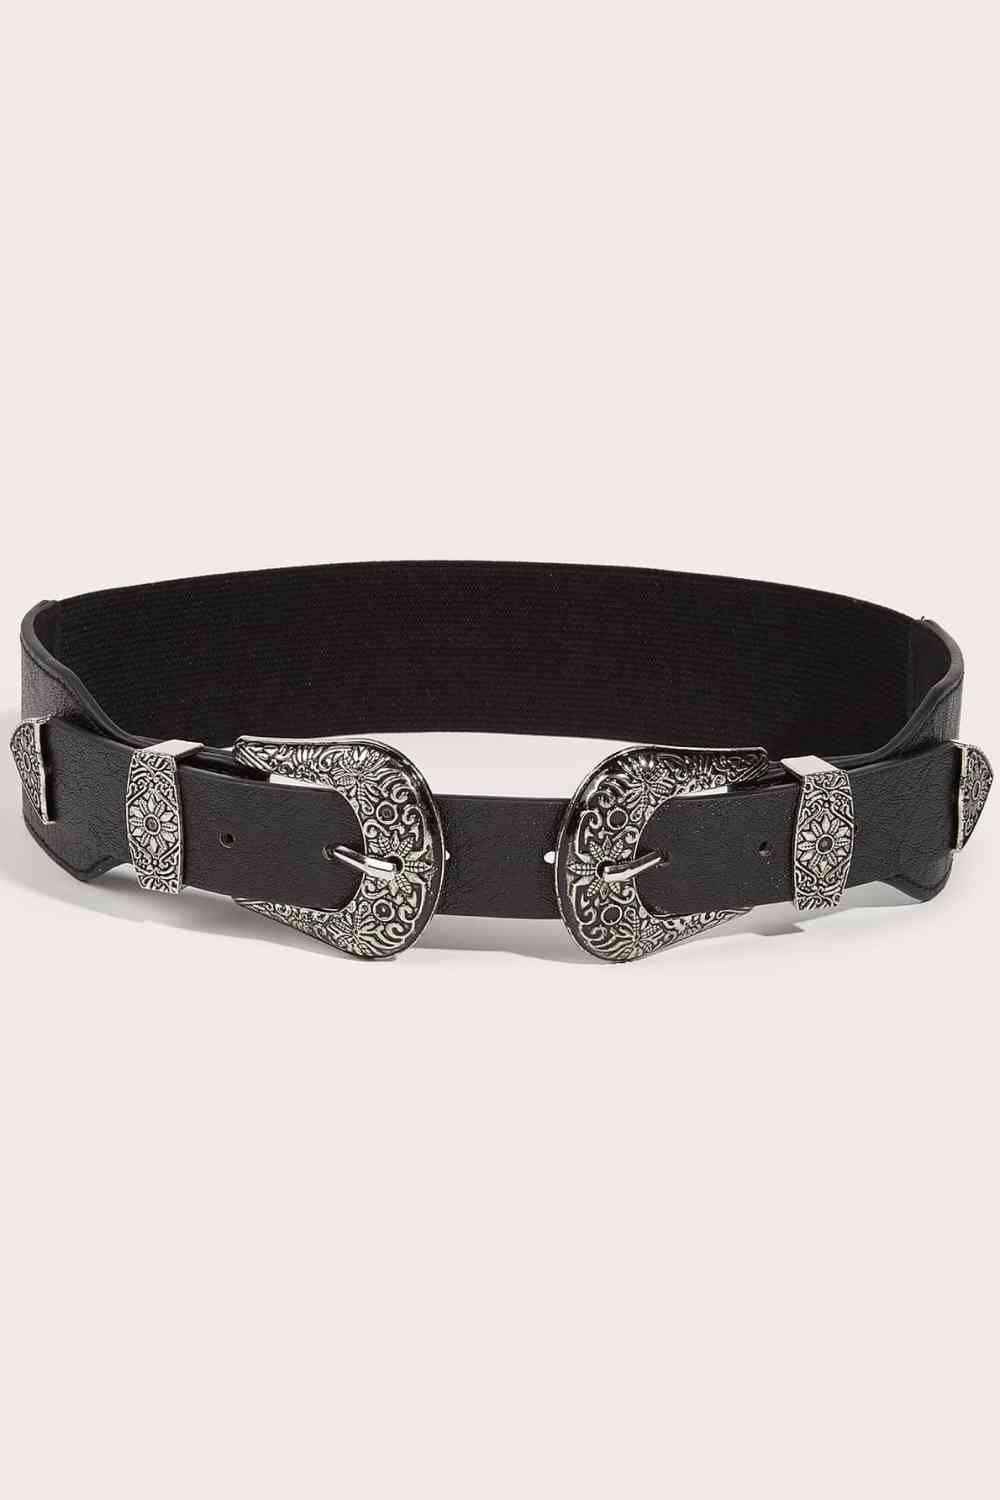 Double Buckle PU Leather Belt Black